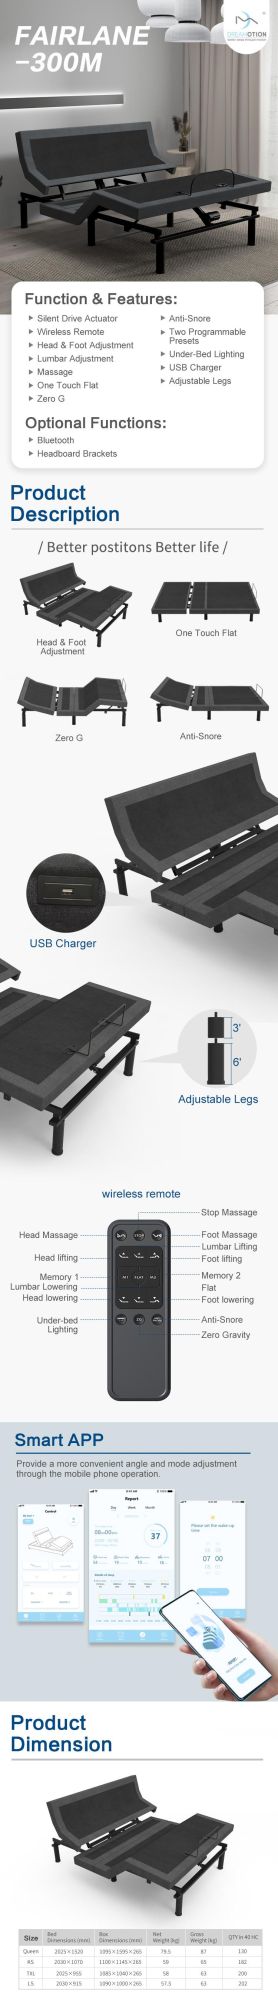 Dreamotion Massage Home Furniture Folding/Foldable Electric Smart Motor Remote Control Adjustable Bed